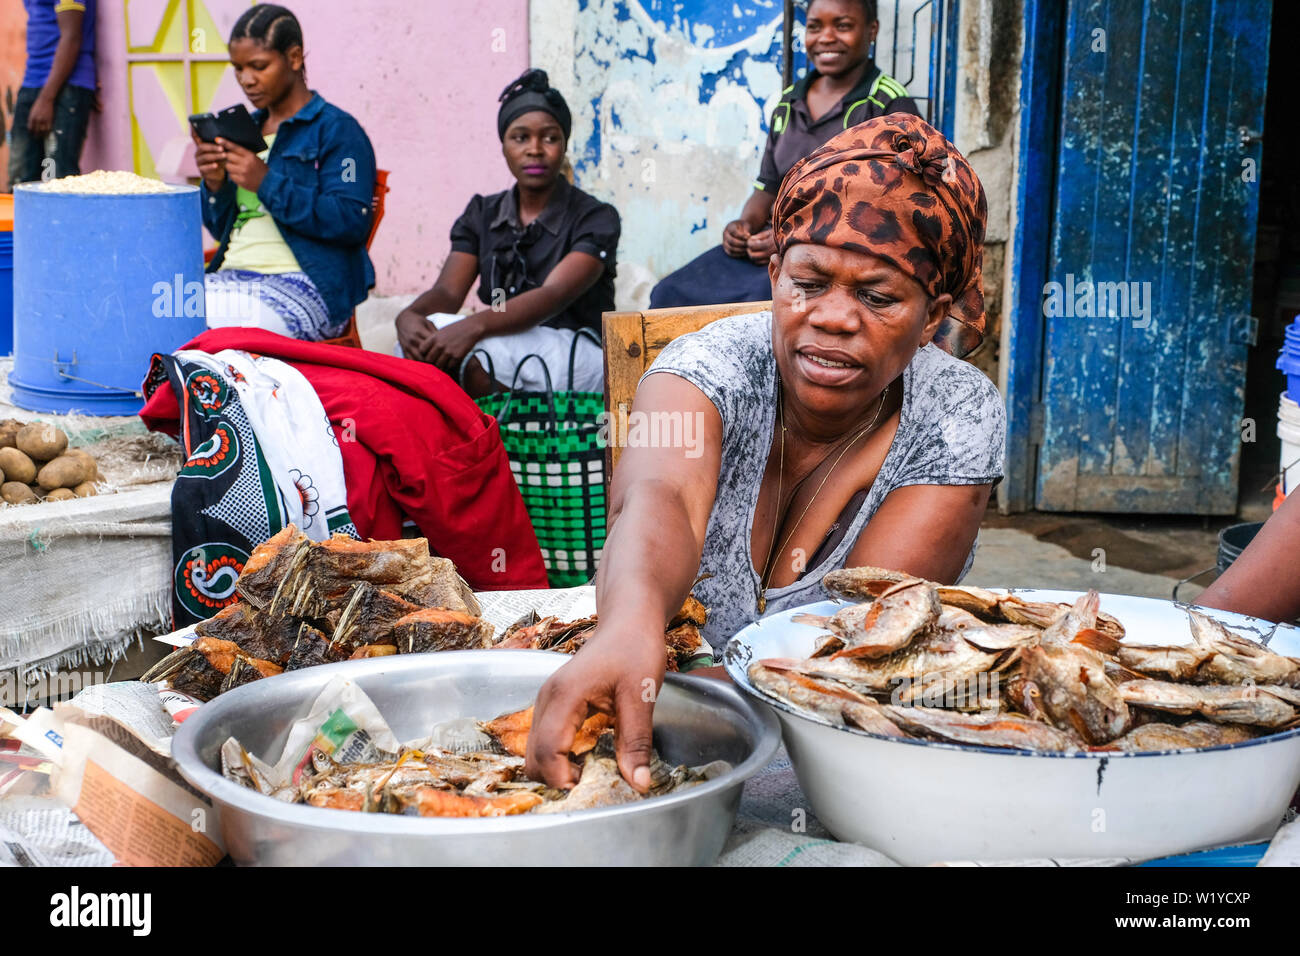 Fish stall in Mbeya, Tanzania., Africa   ---   Obst- und Gemüsestand in Mbeya, Tansania. Stock Photo